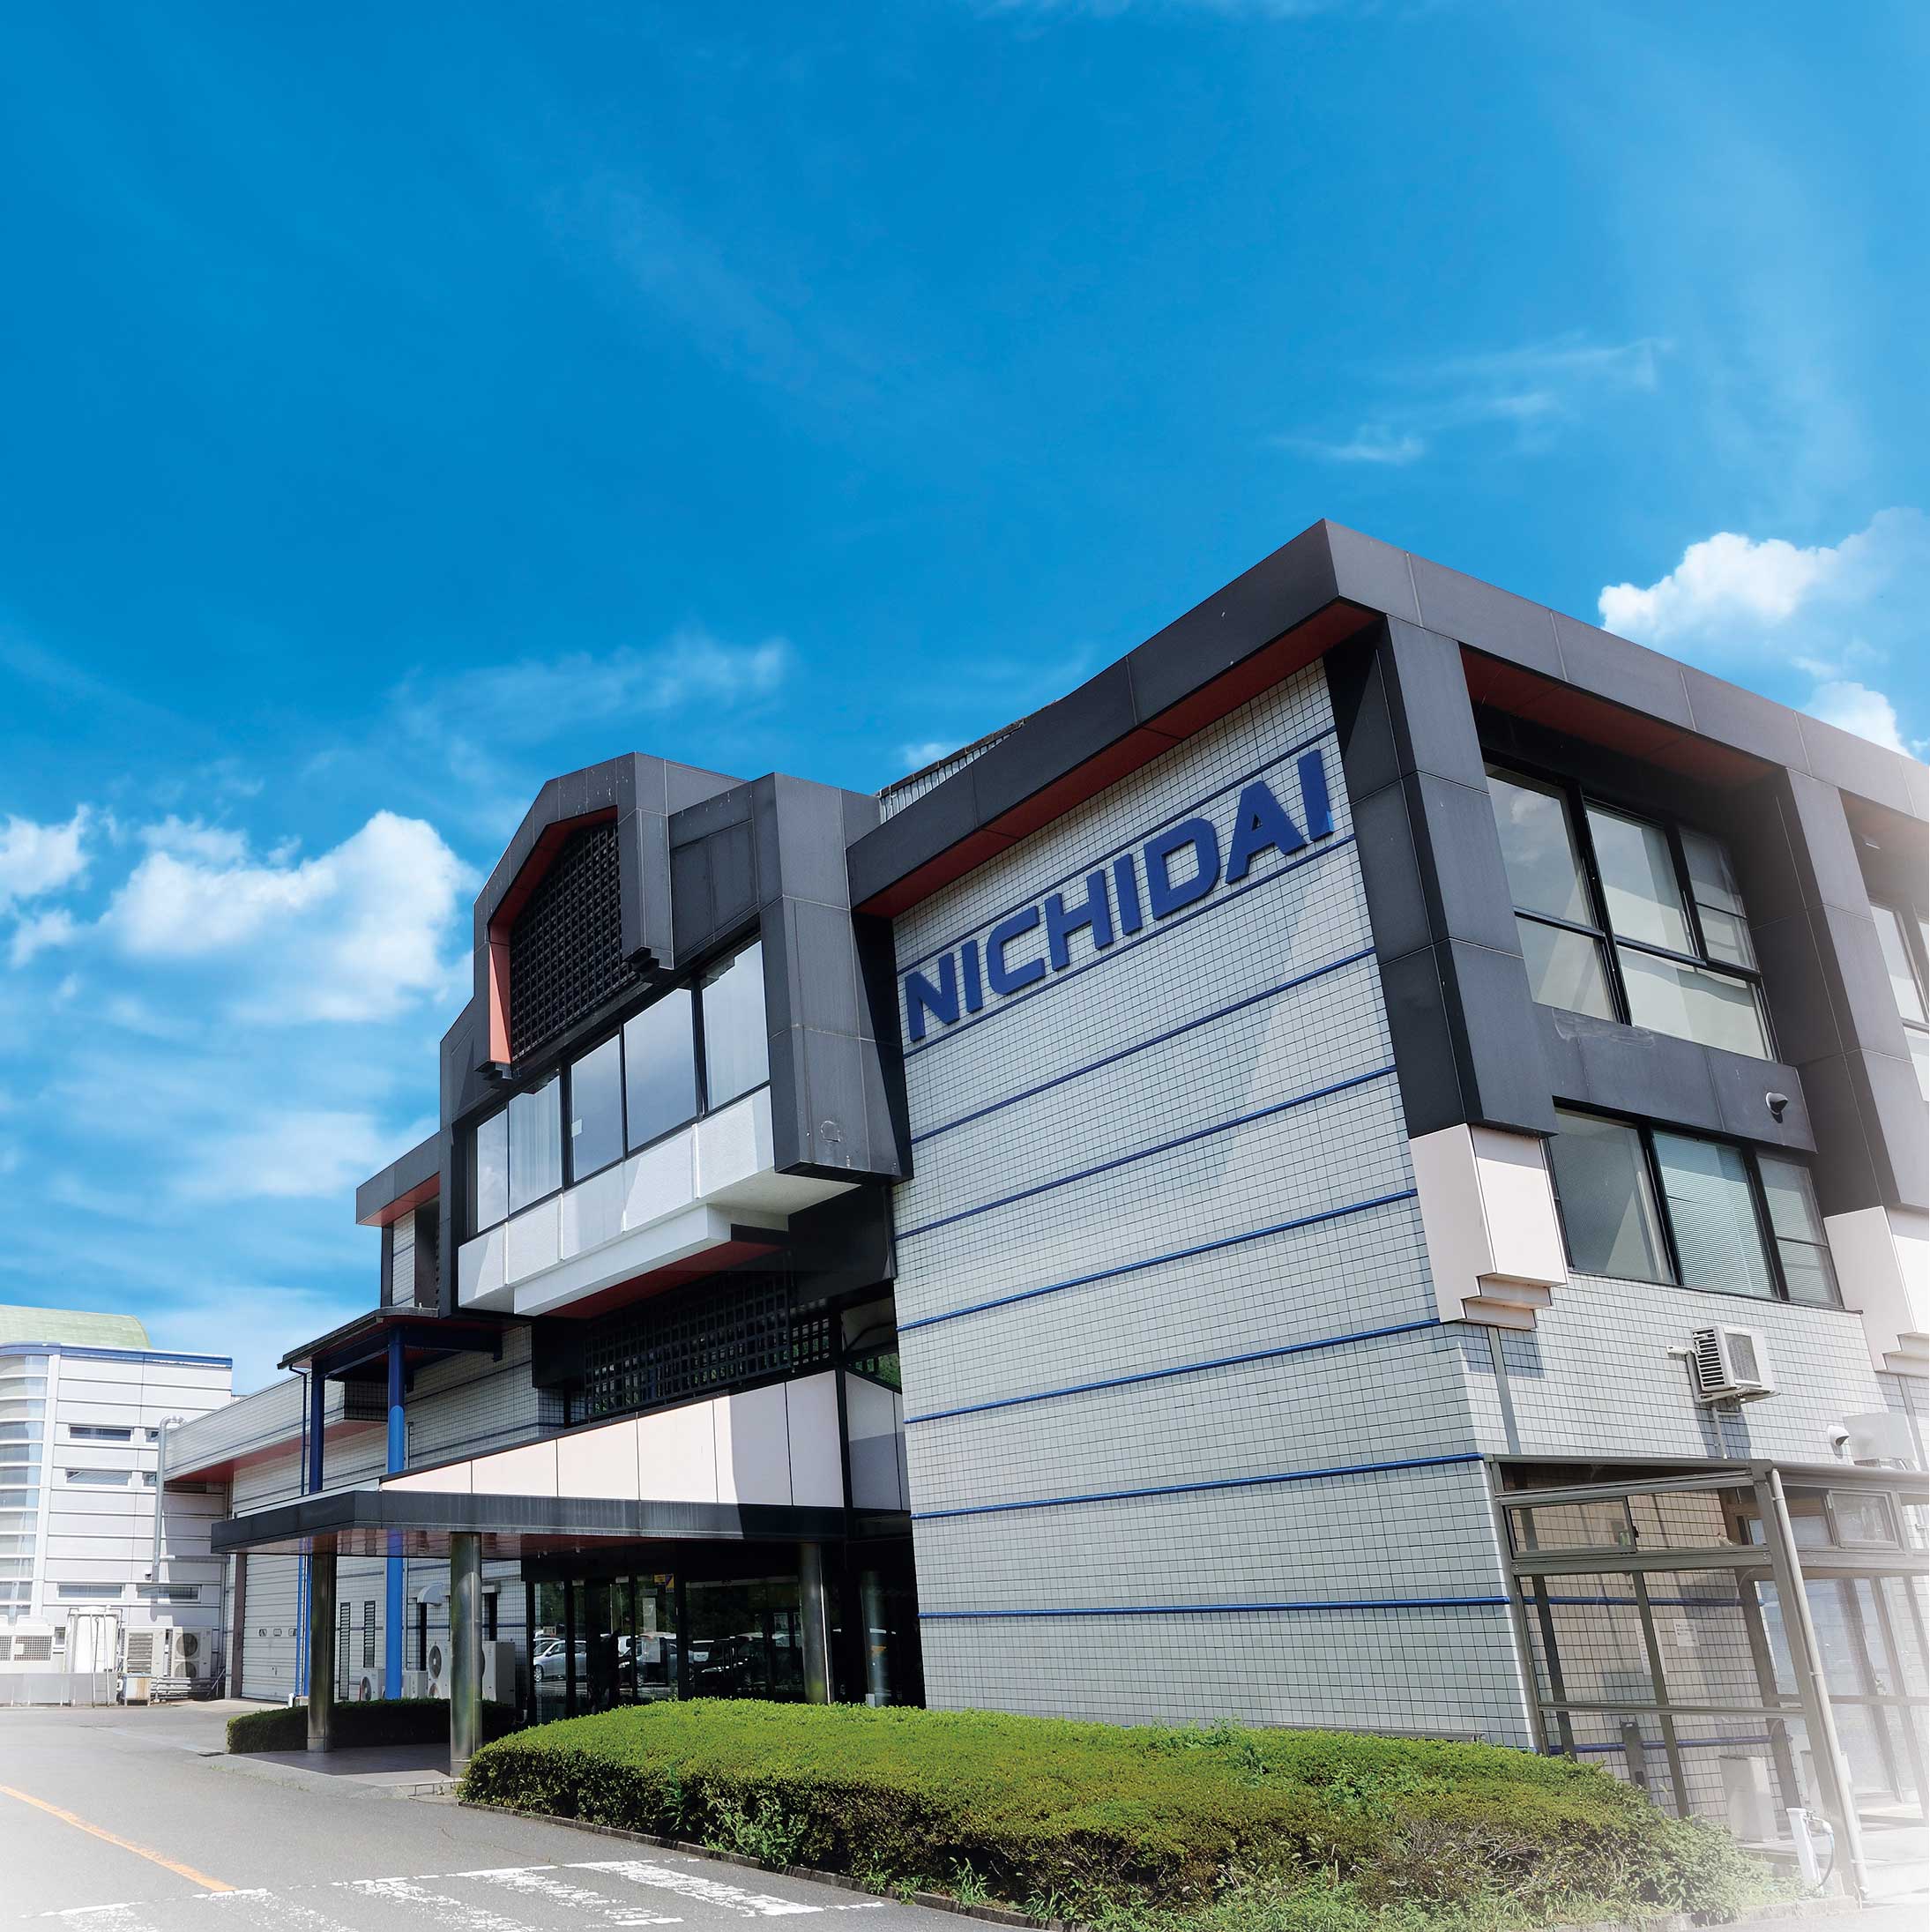 NICHDAI Corporation